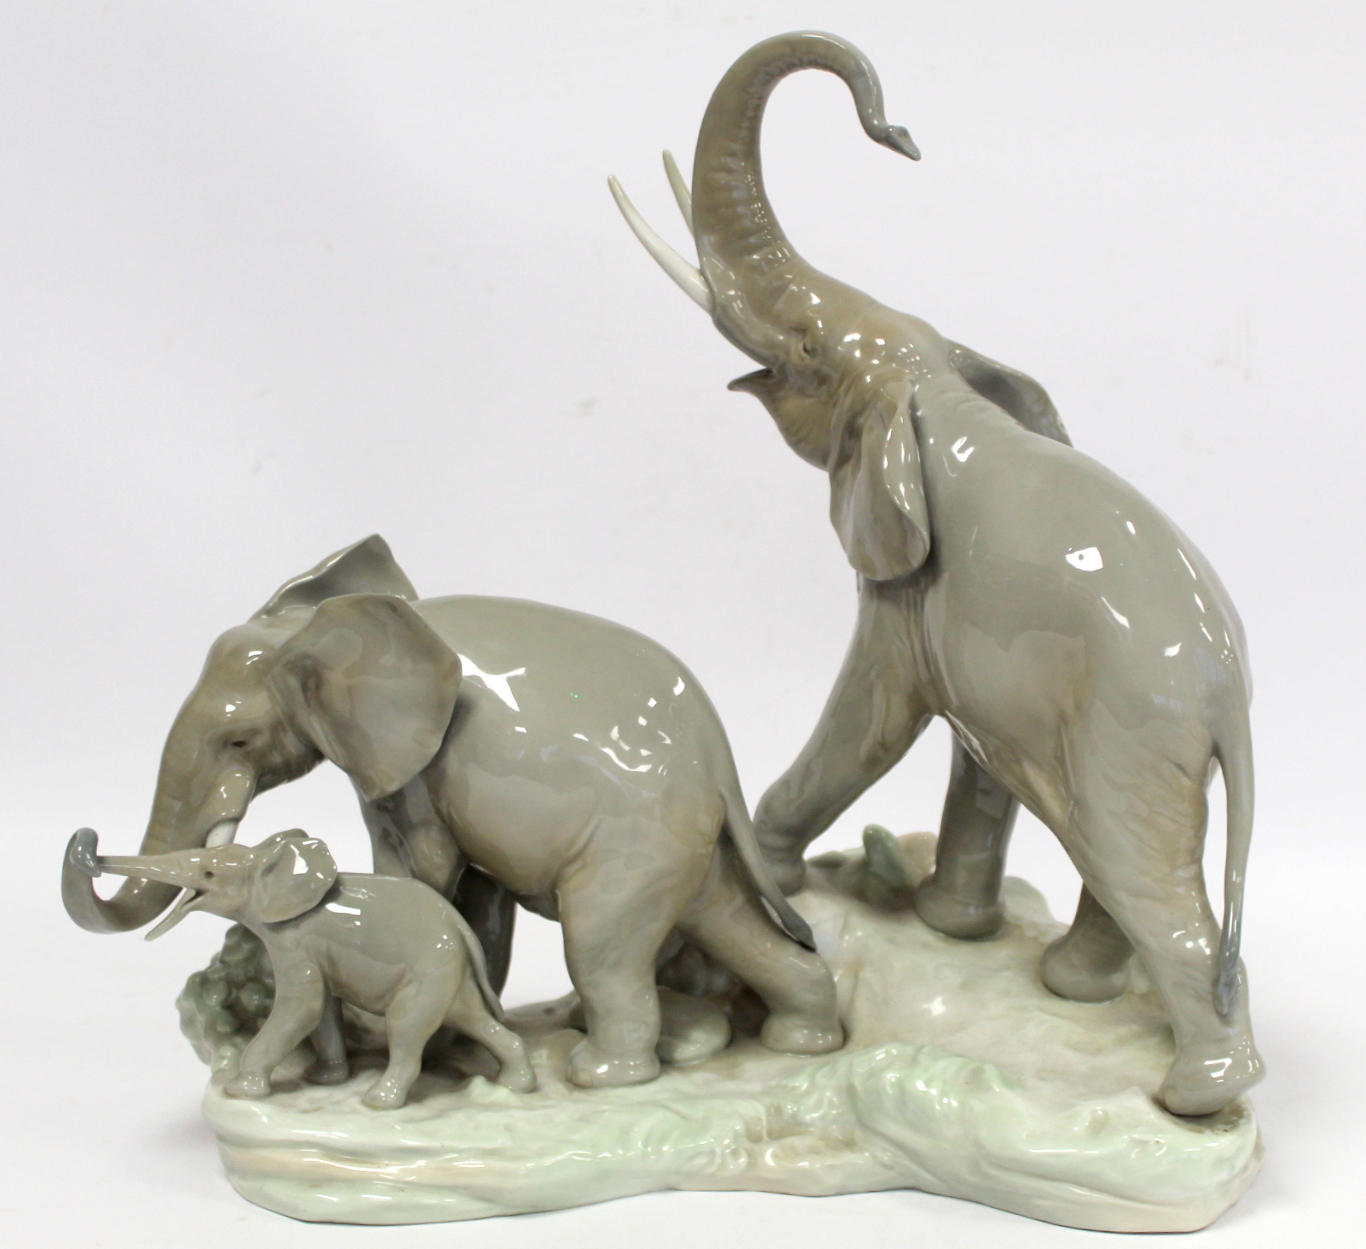 Large Lladro porcelain figure group " Familia de Elefantes" (Elephant family) model no. 01004764,